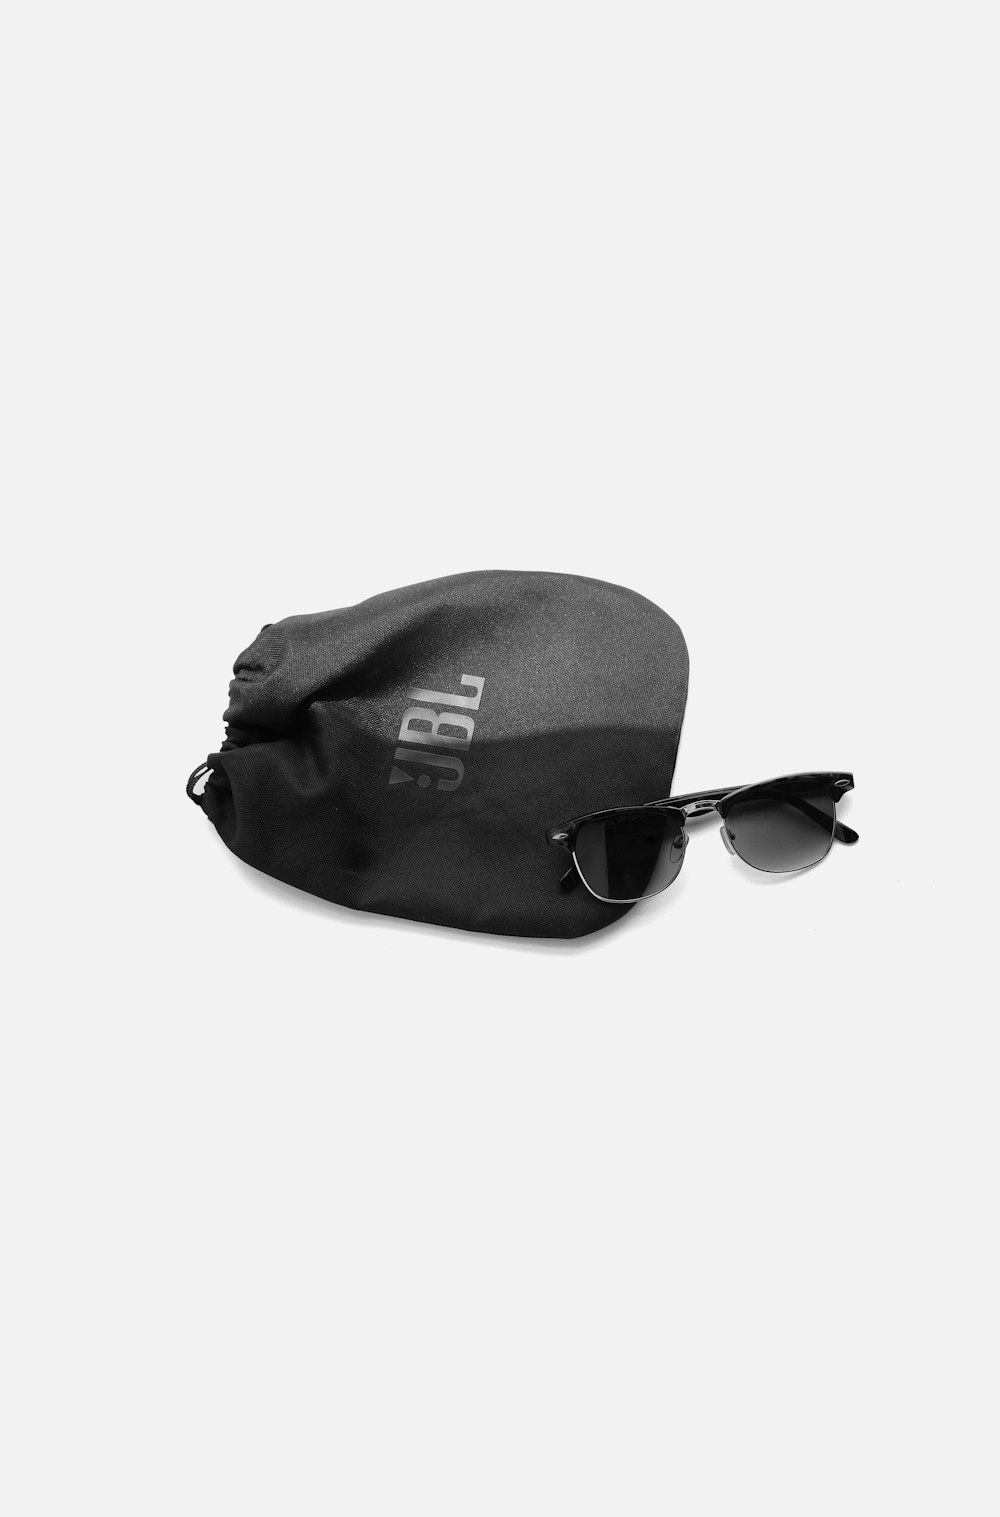 black sunglasses on black cap